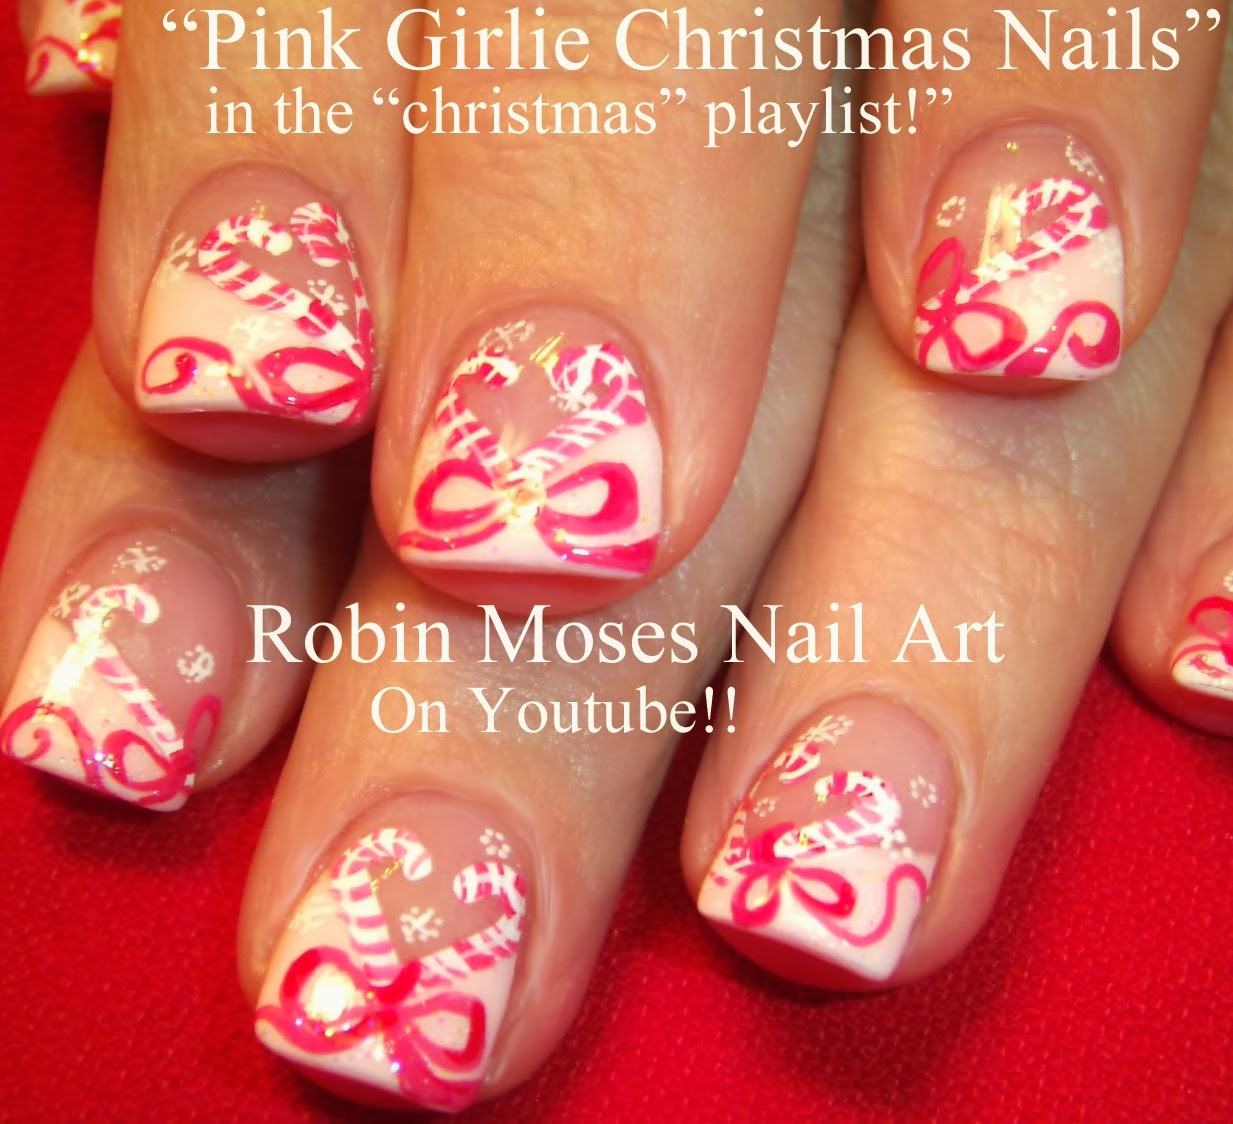 Robin Moses Nail Art "nail art christmas" "christmas corset" "girlie